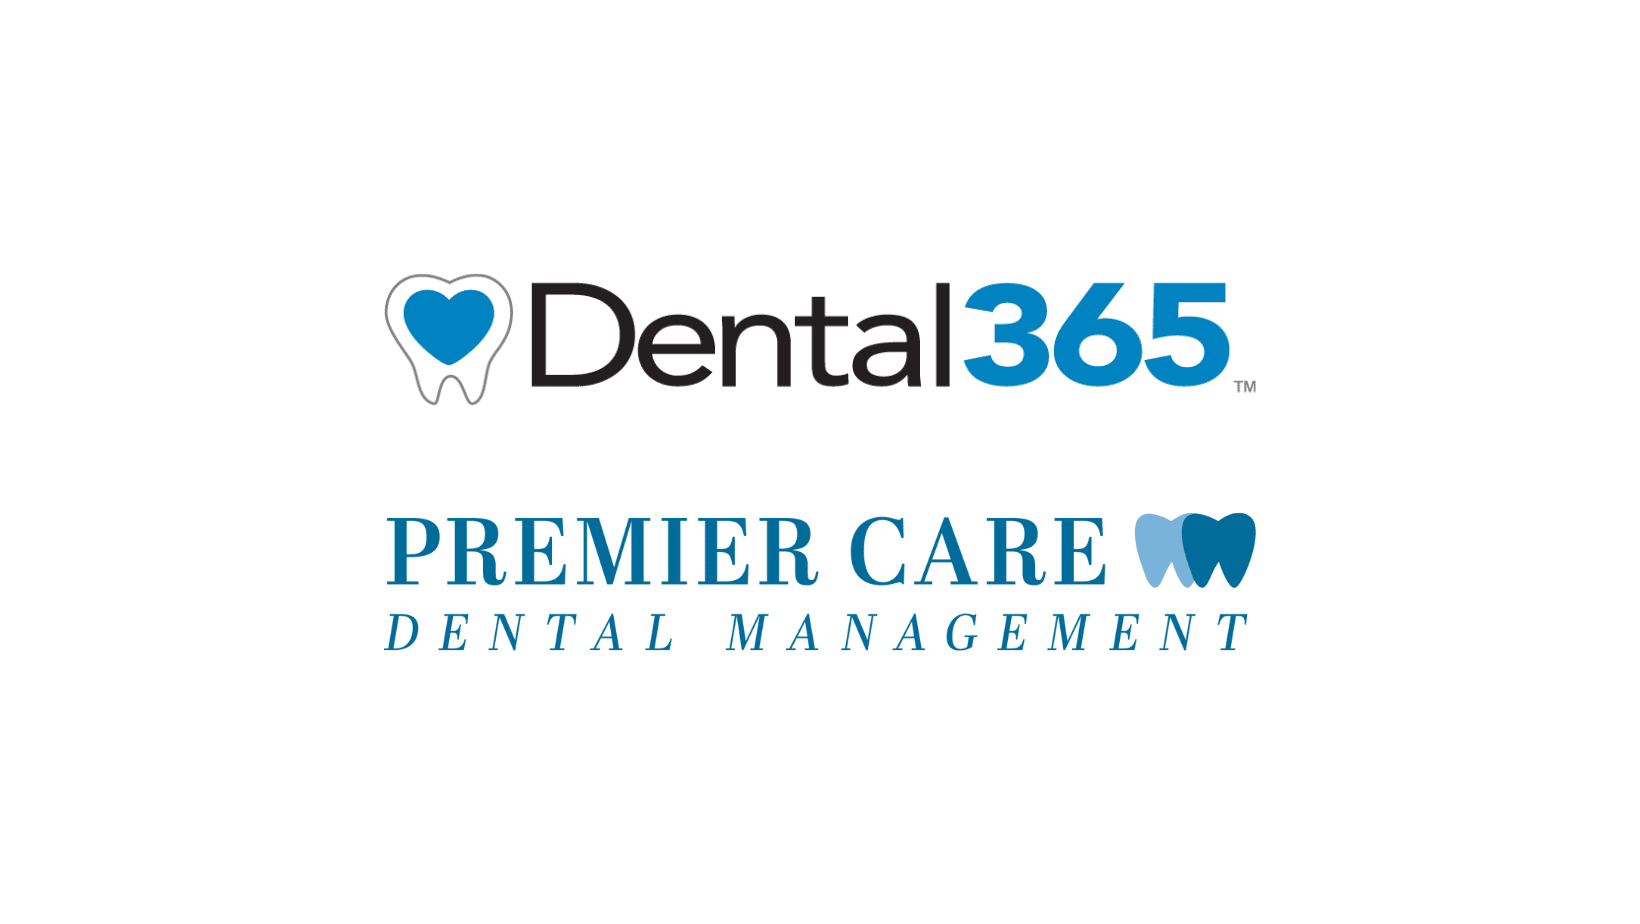 Premier Care Dental Management / Dental365 Celebrates Many Milestones in 2022